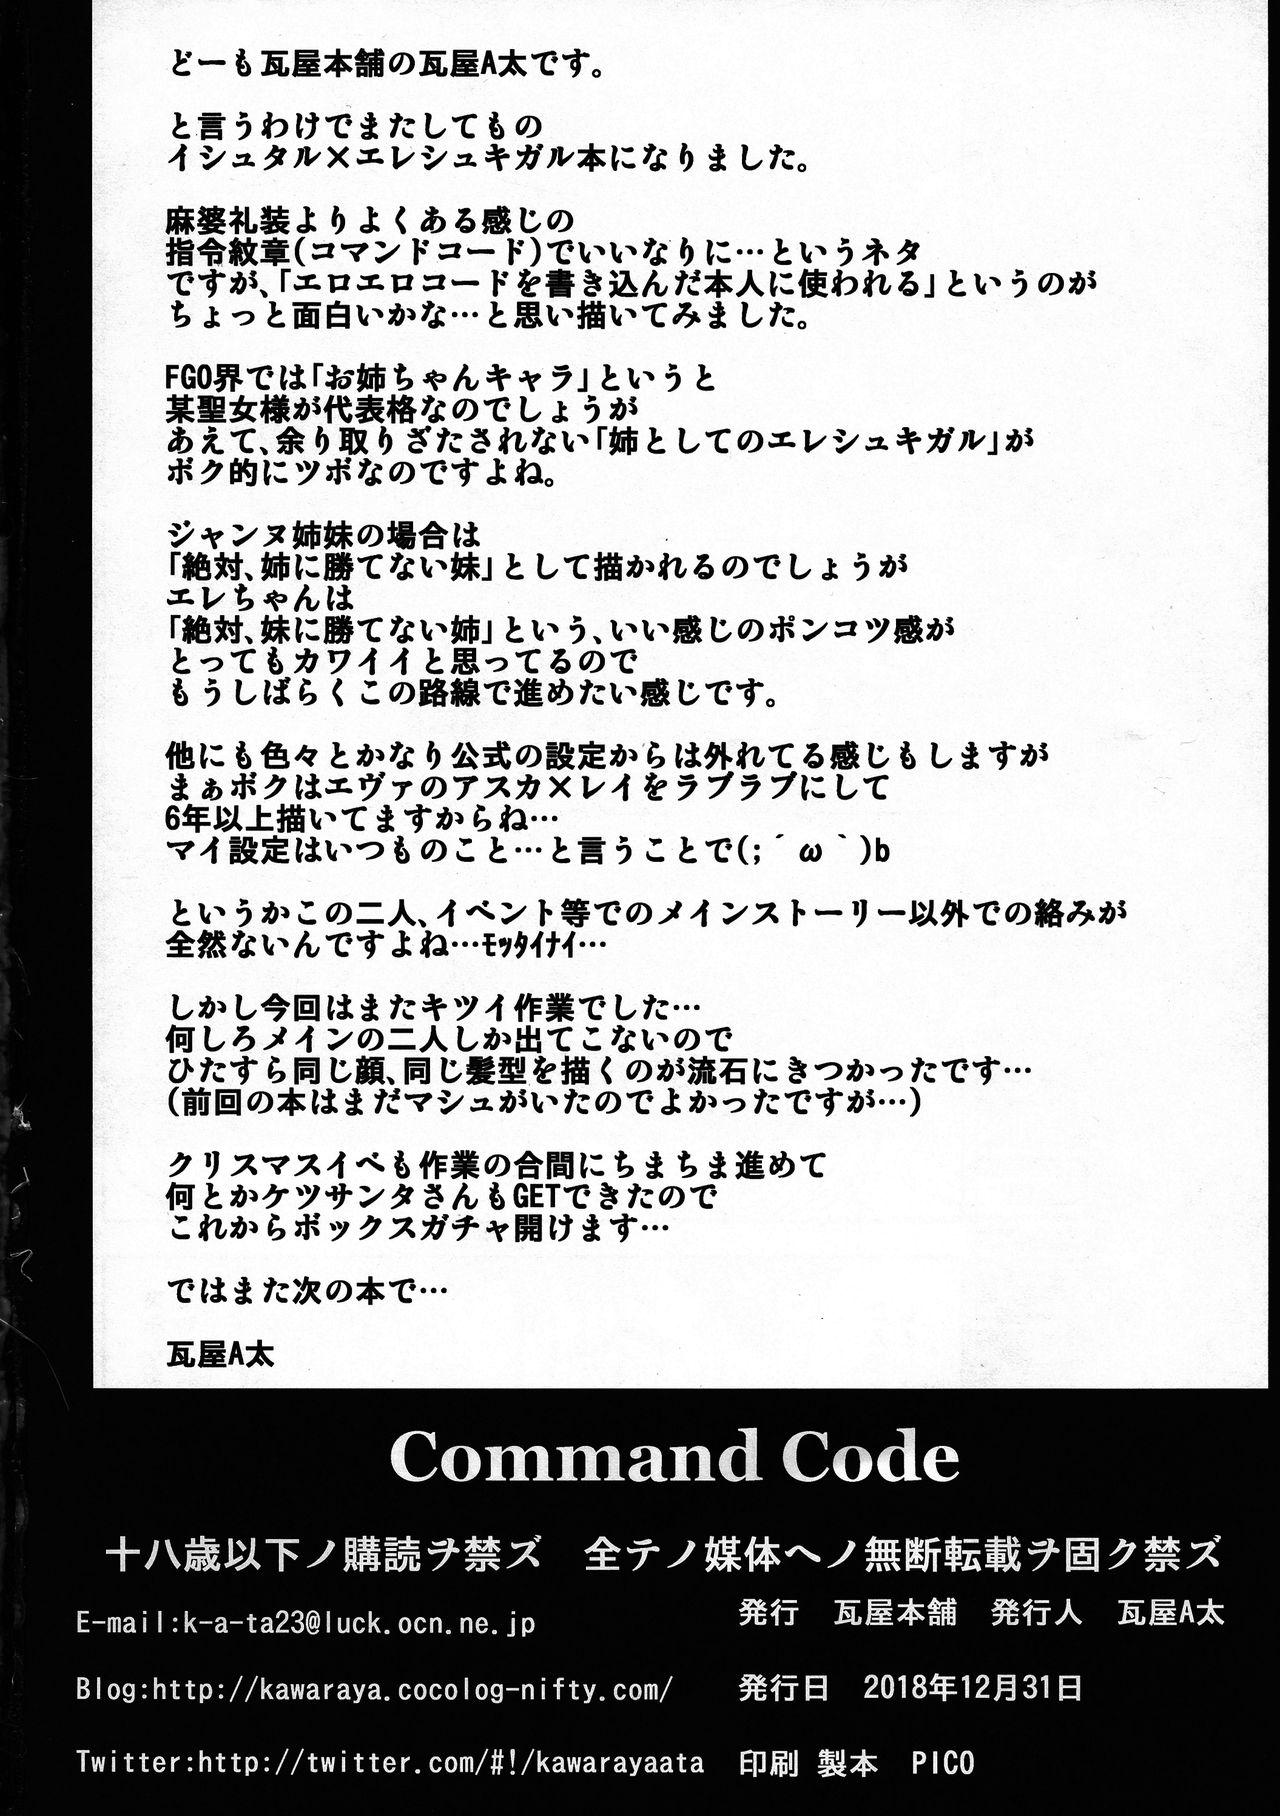 COMMAND CODE 42